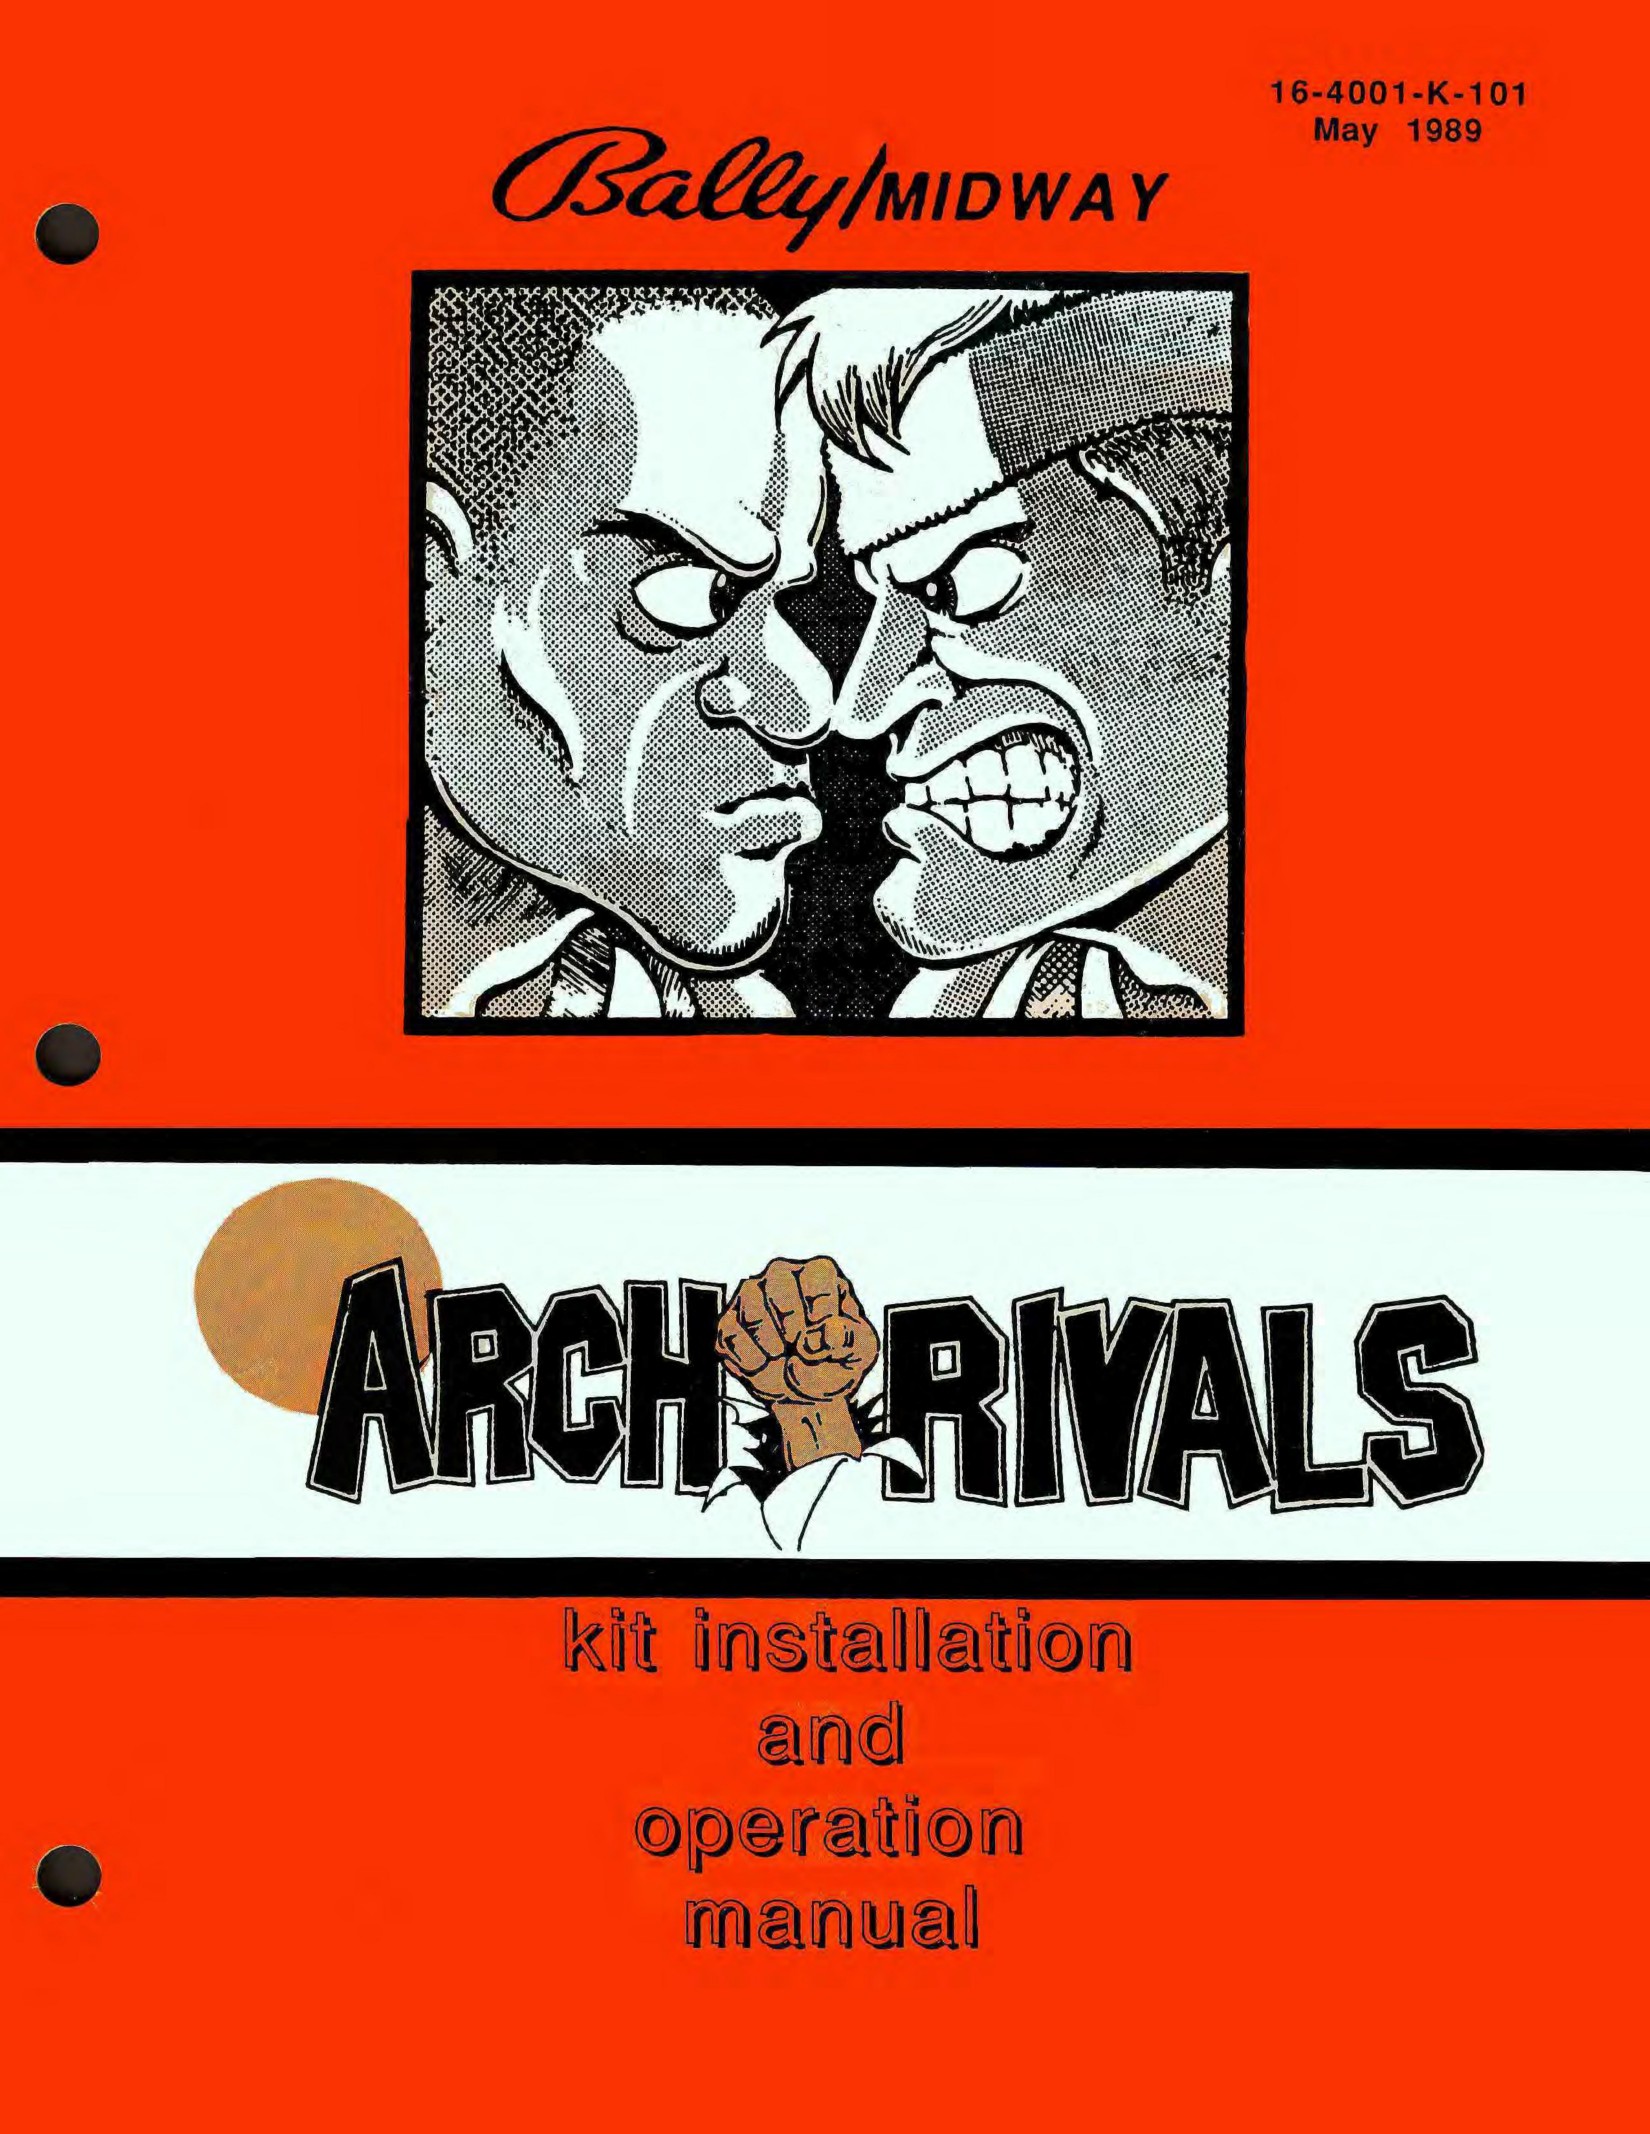 Arch Rivals Kit Installation (16-4001-K-101 May 1989)